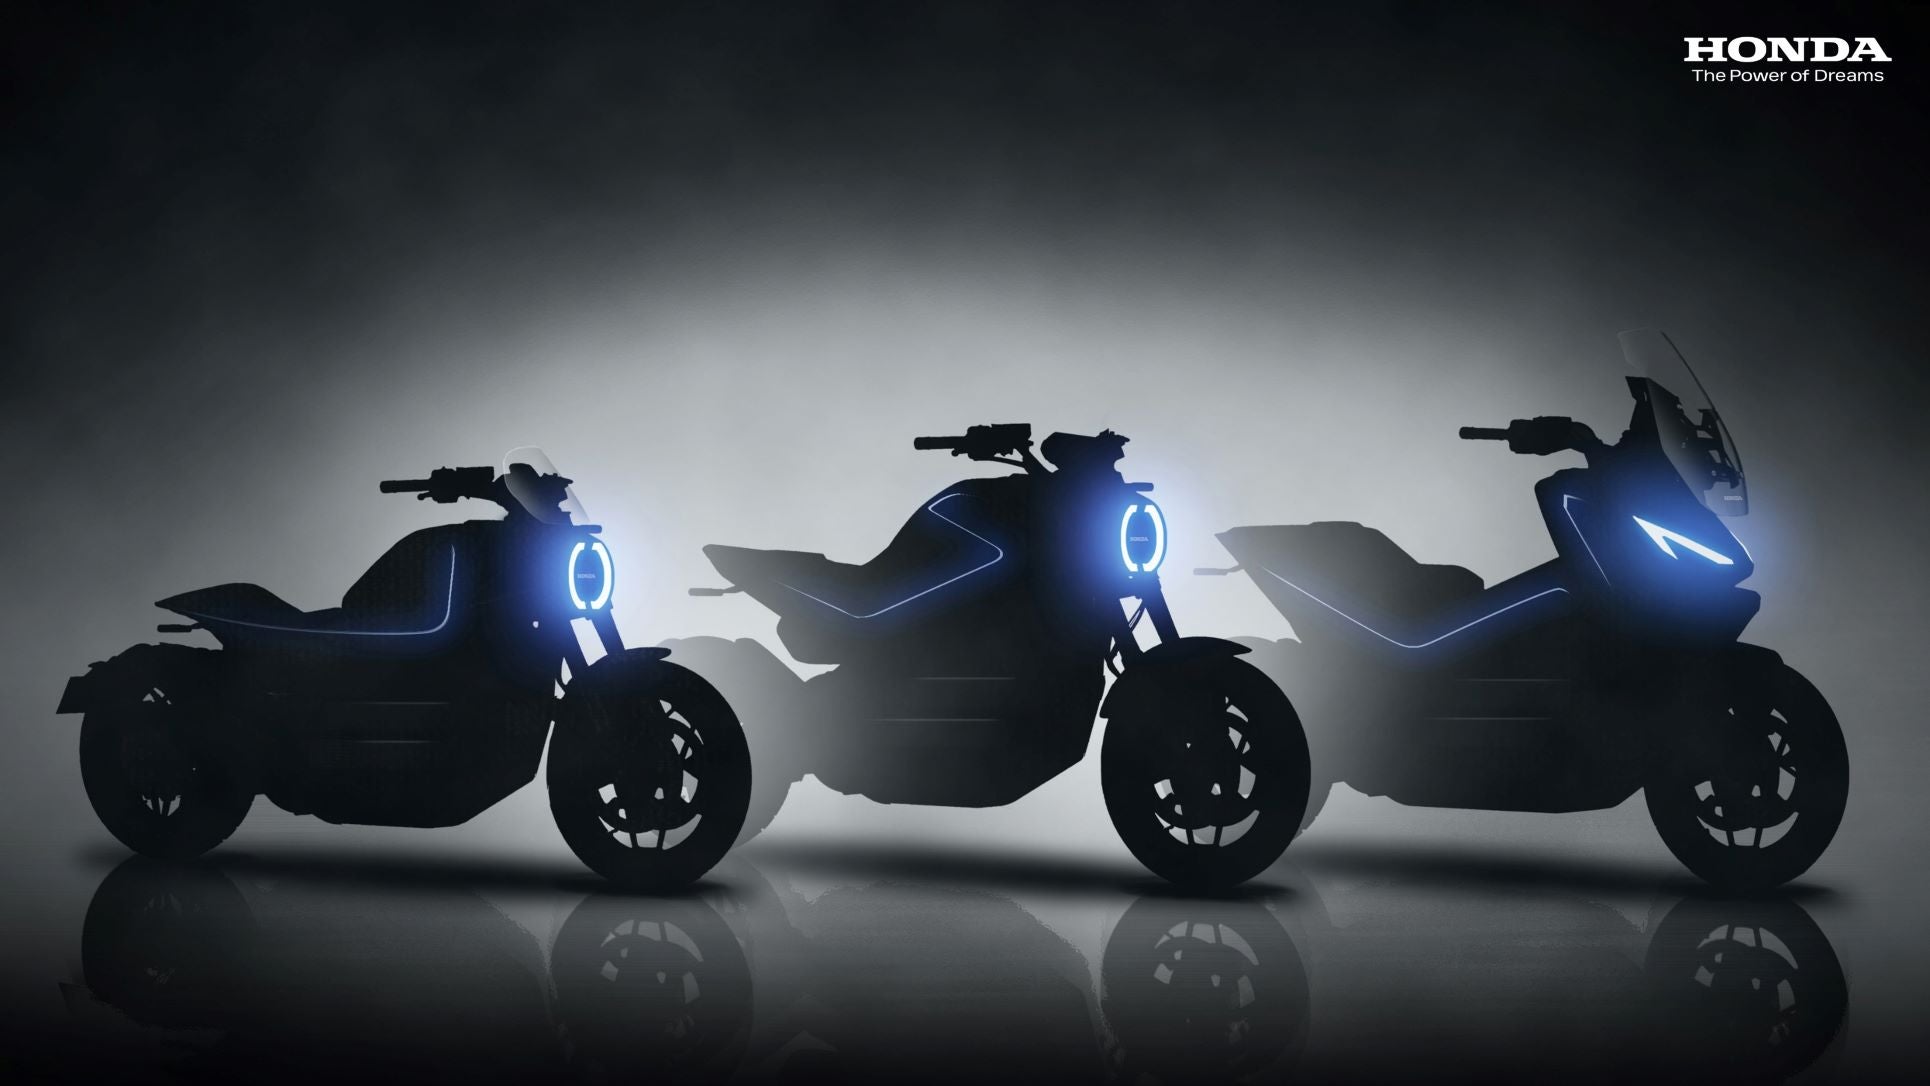 Honda details motorcycle electrification plans